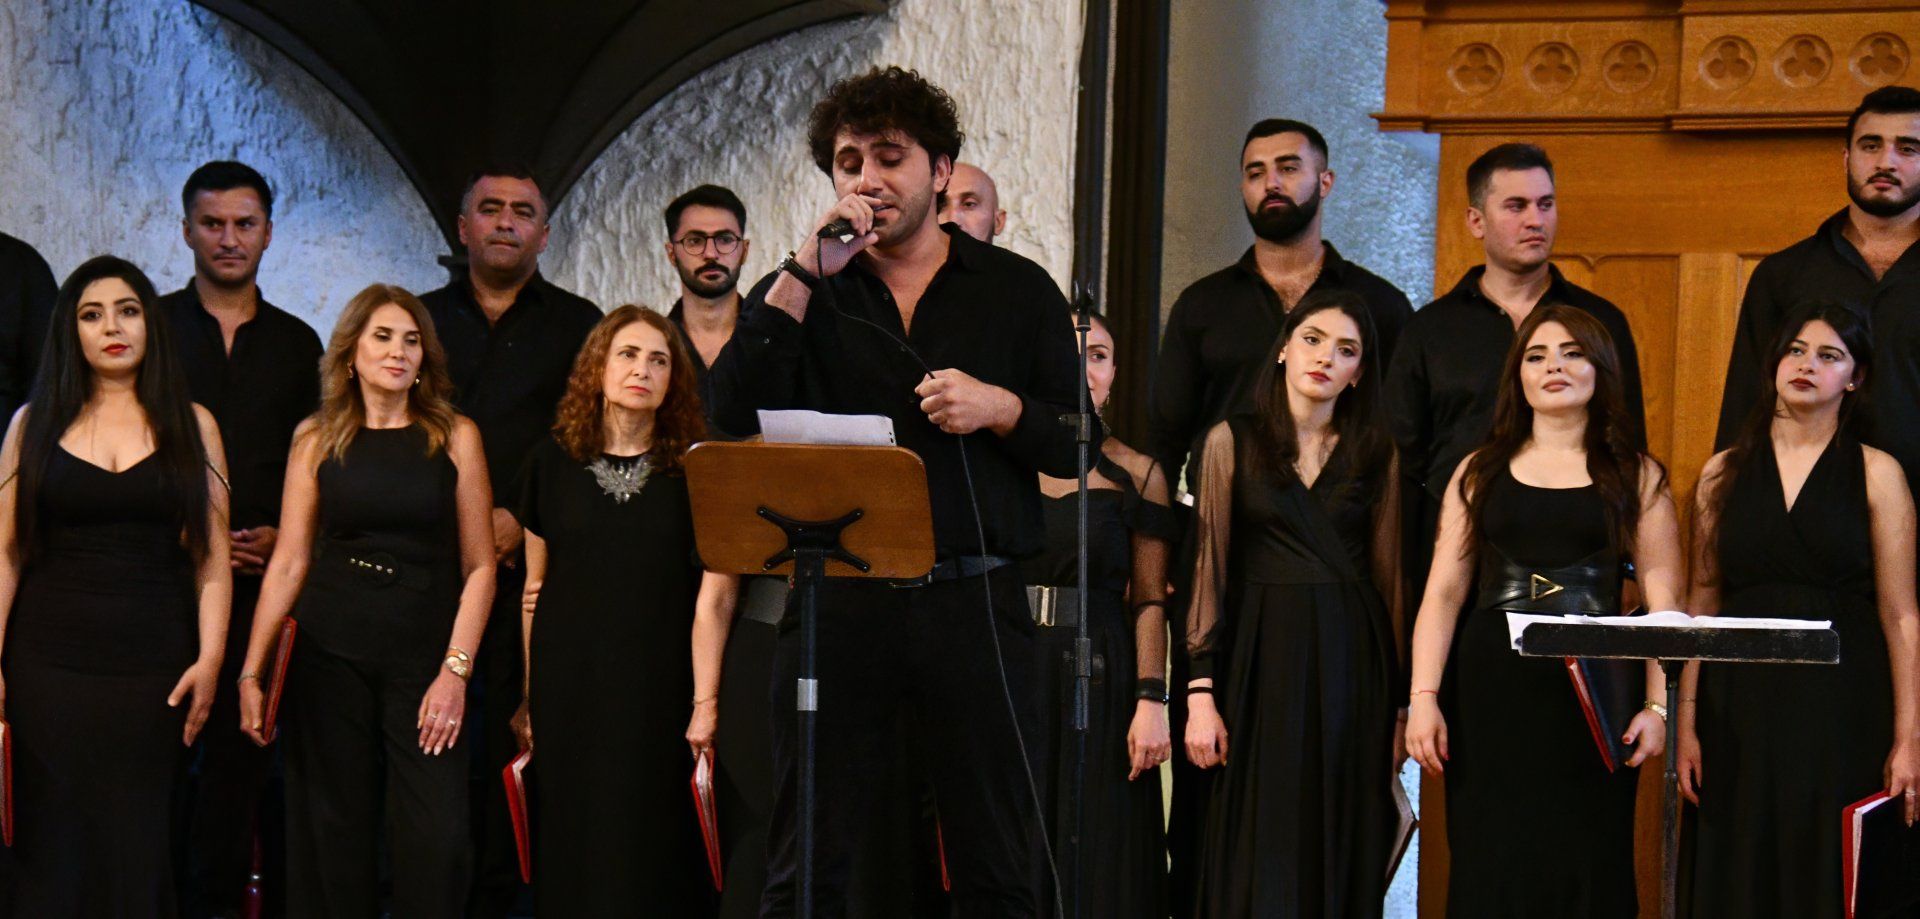 State Choir Chapel performs magnificent concert [PHOTOS]